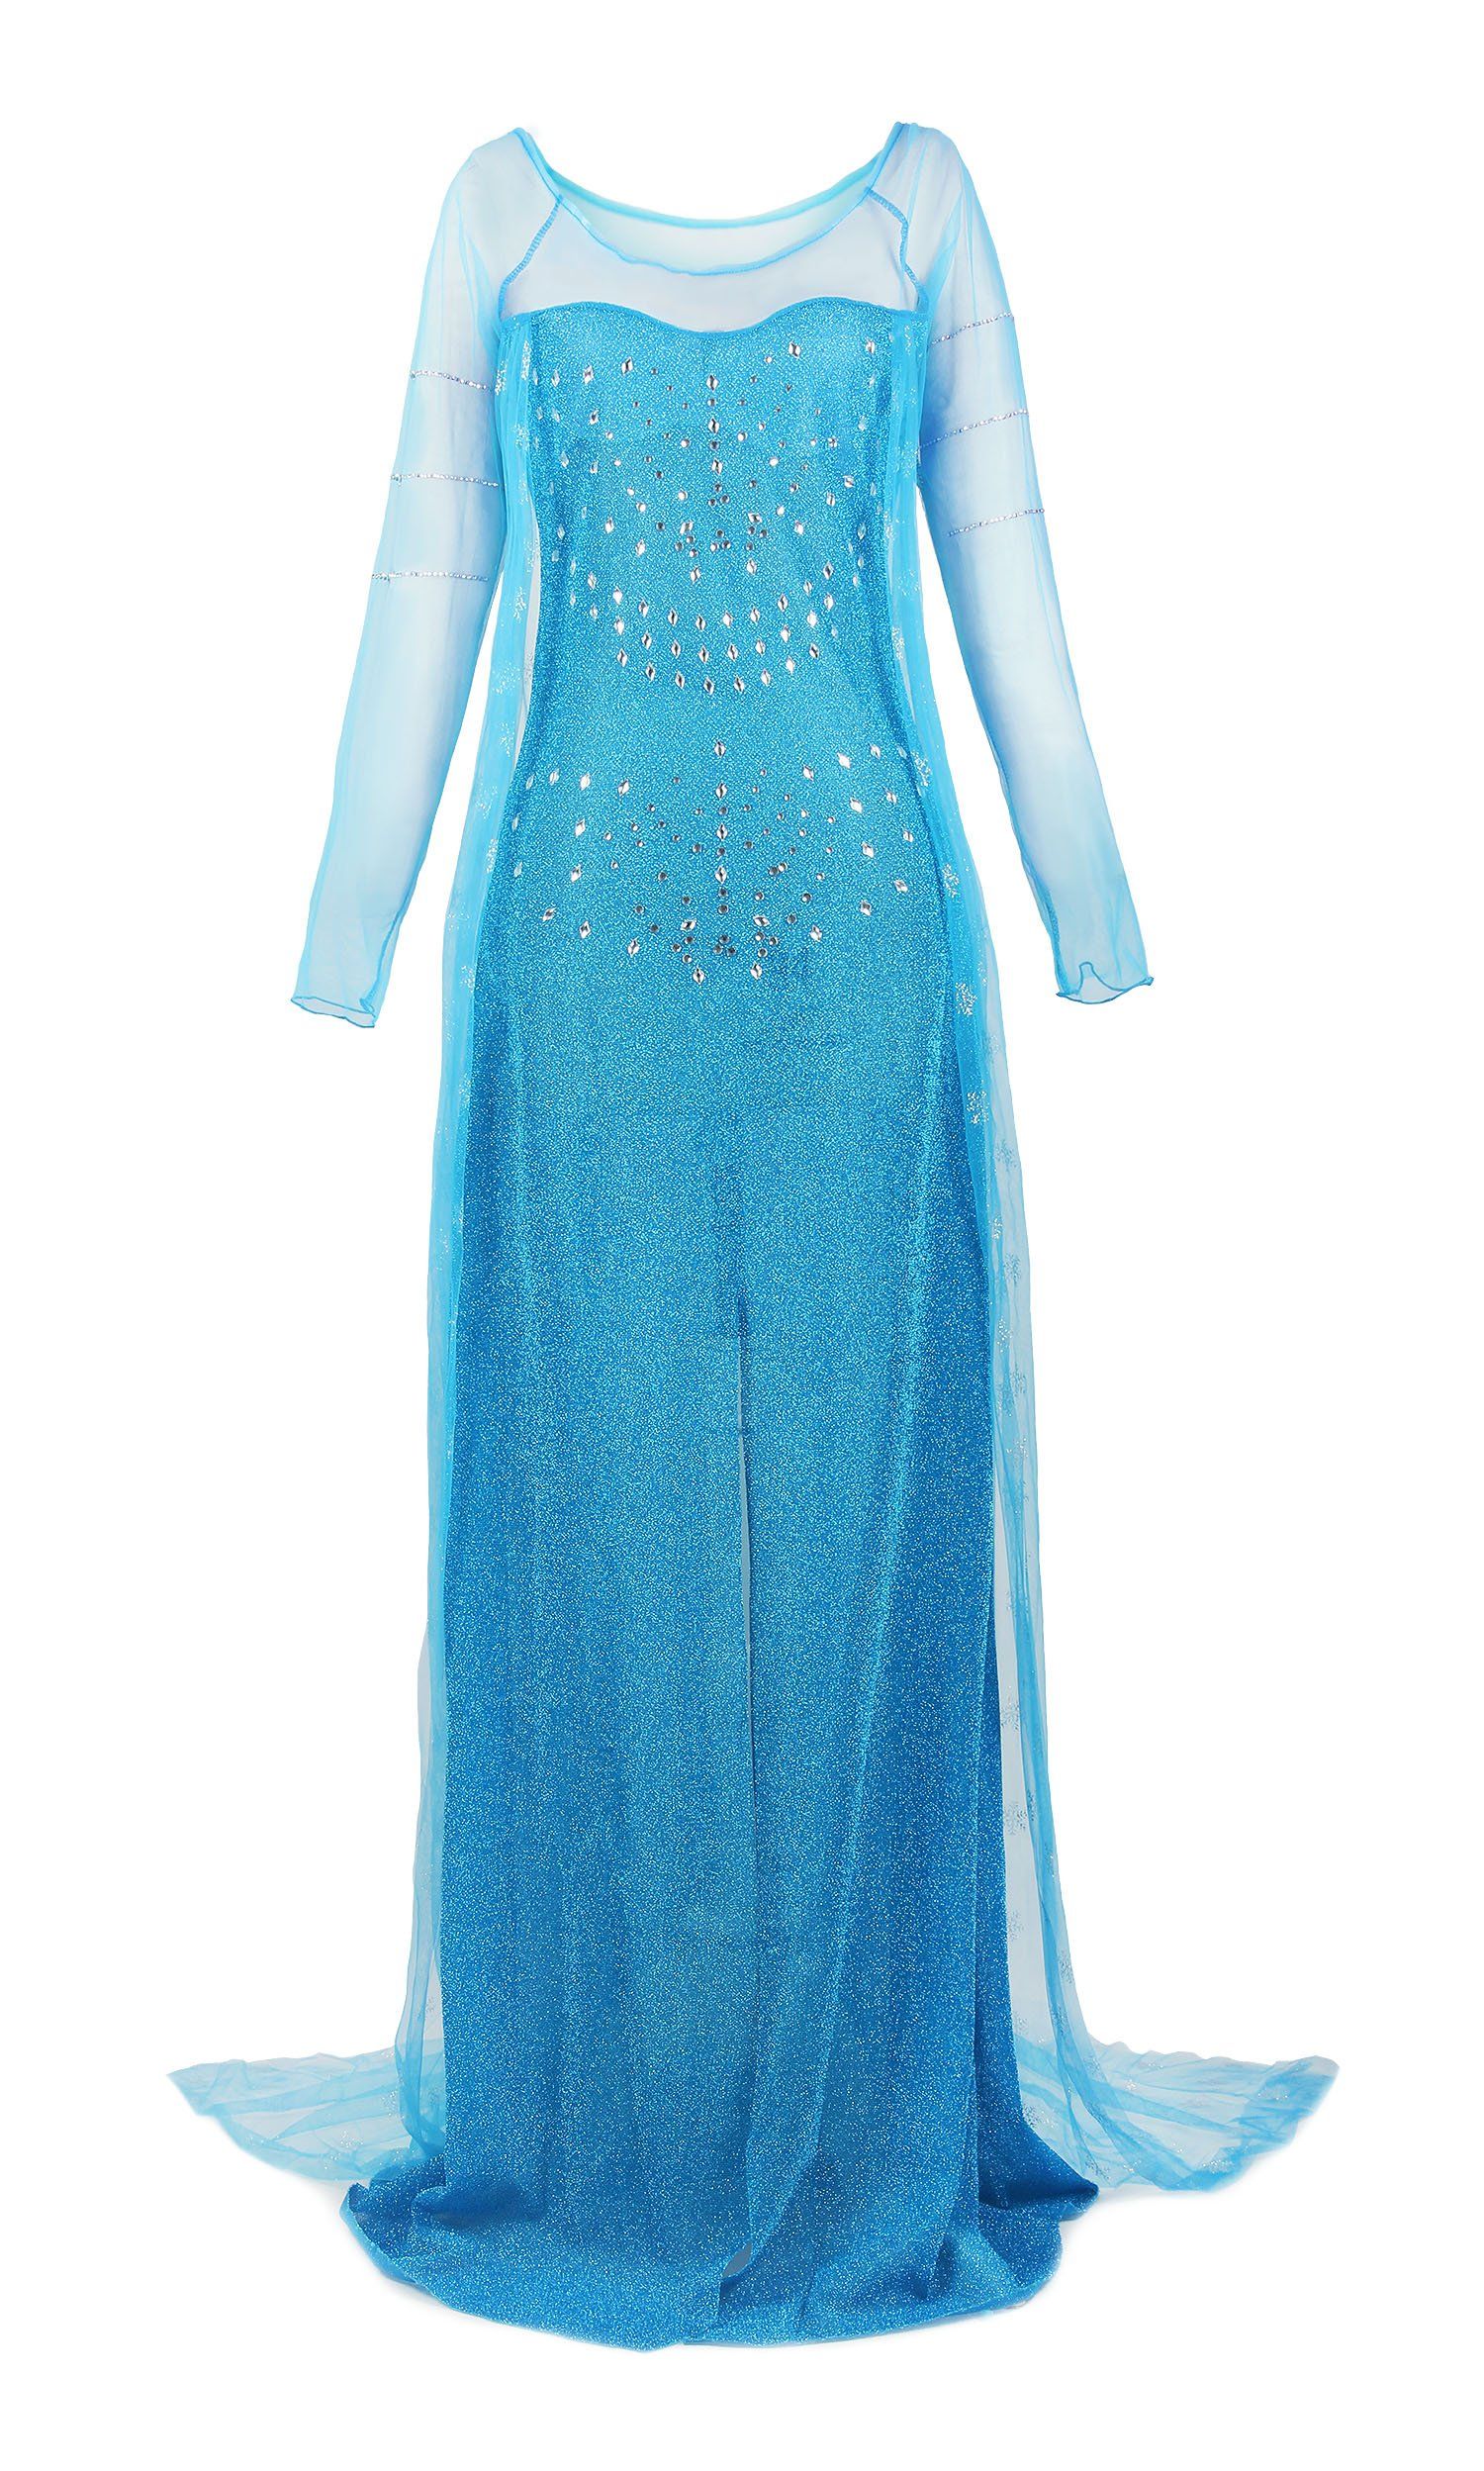 Relibeauty Womens Princess Elsa Sequin Dress Up Costume Large Blue